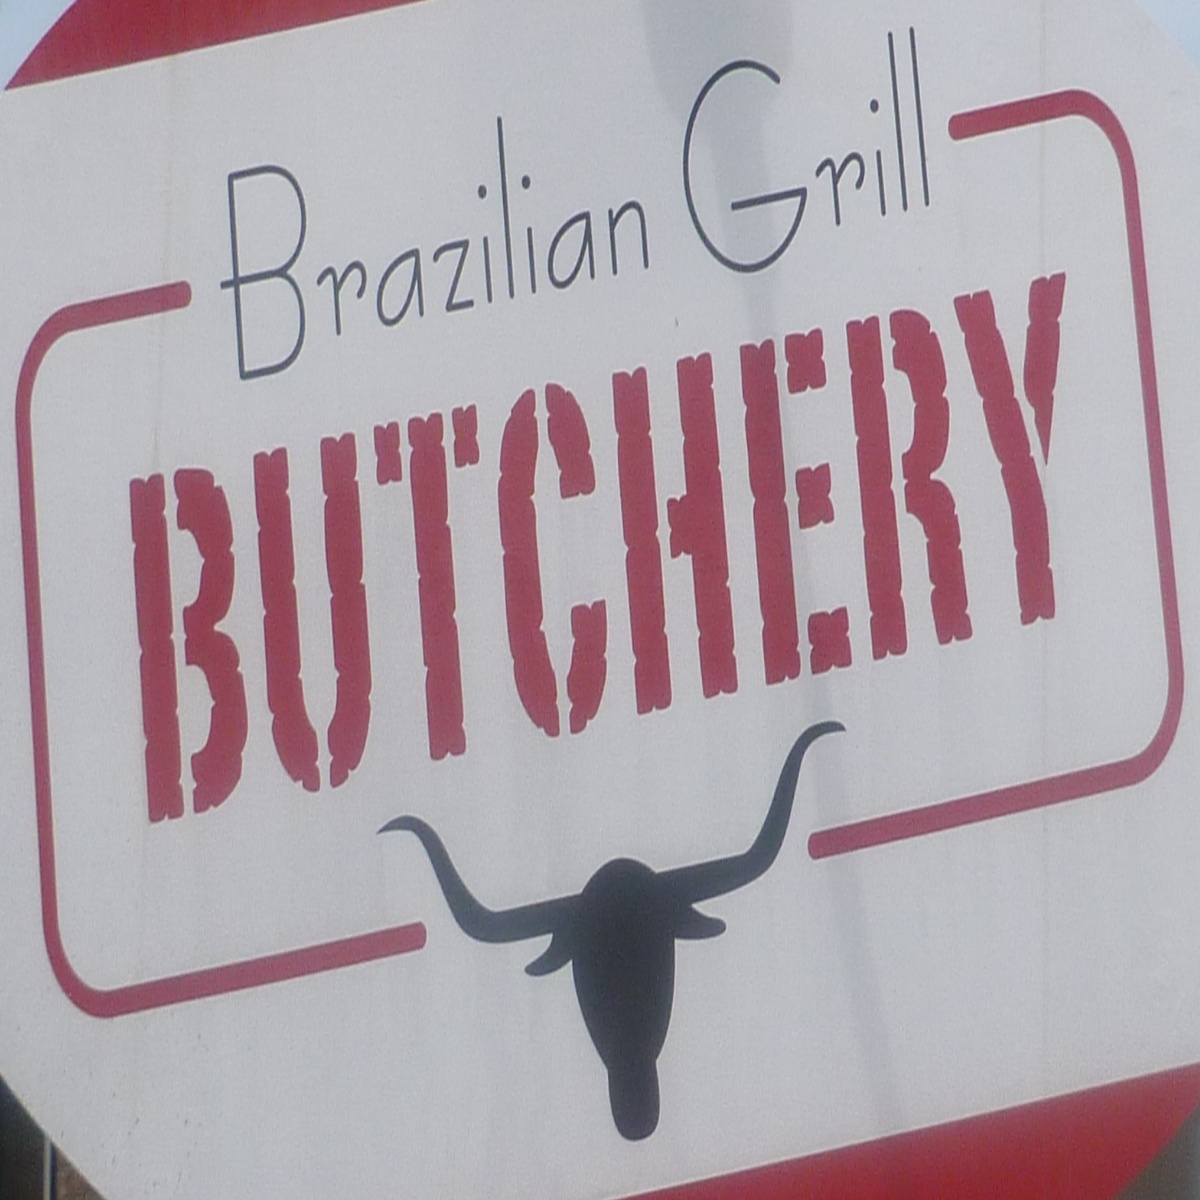 Brazilian Grill Butchery